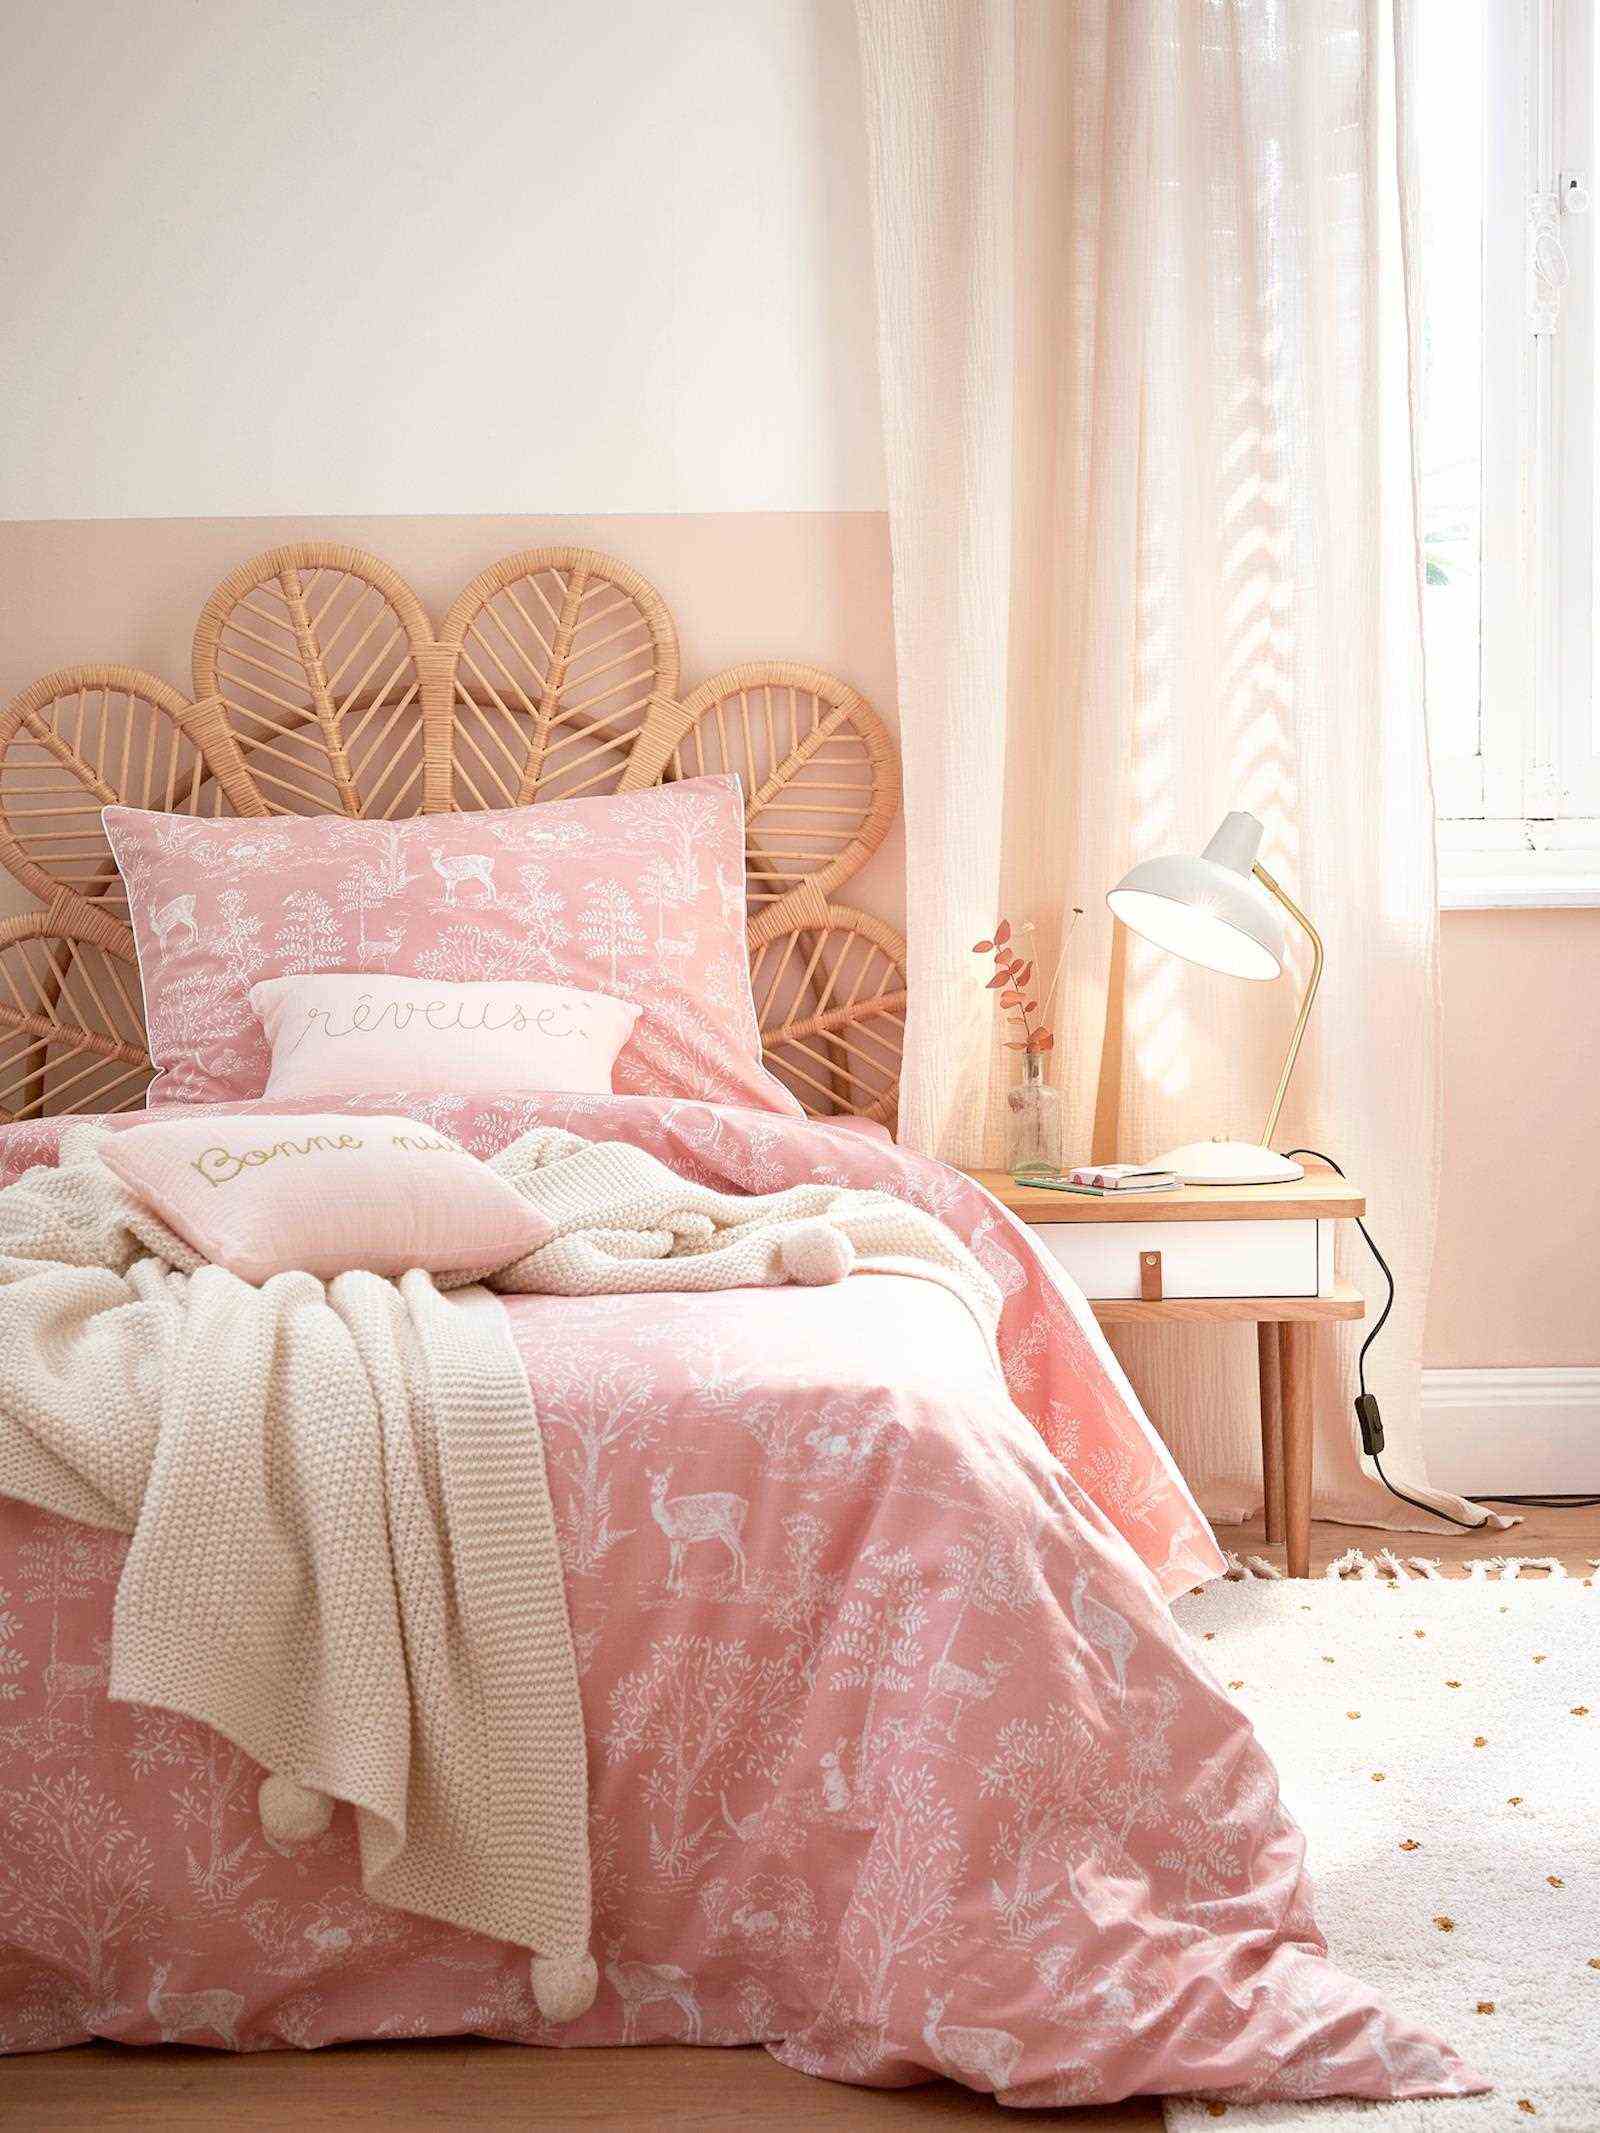 Retro bedroom pale pink rattan headboard 